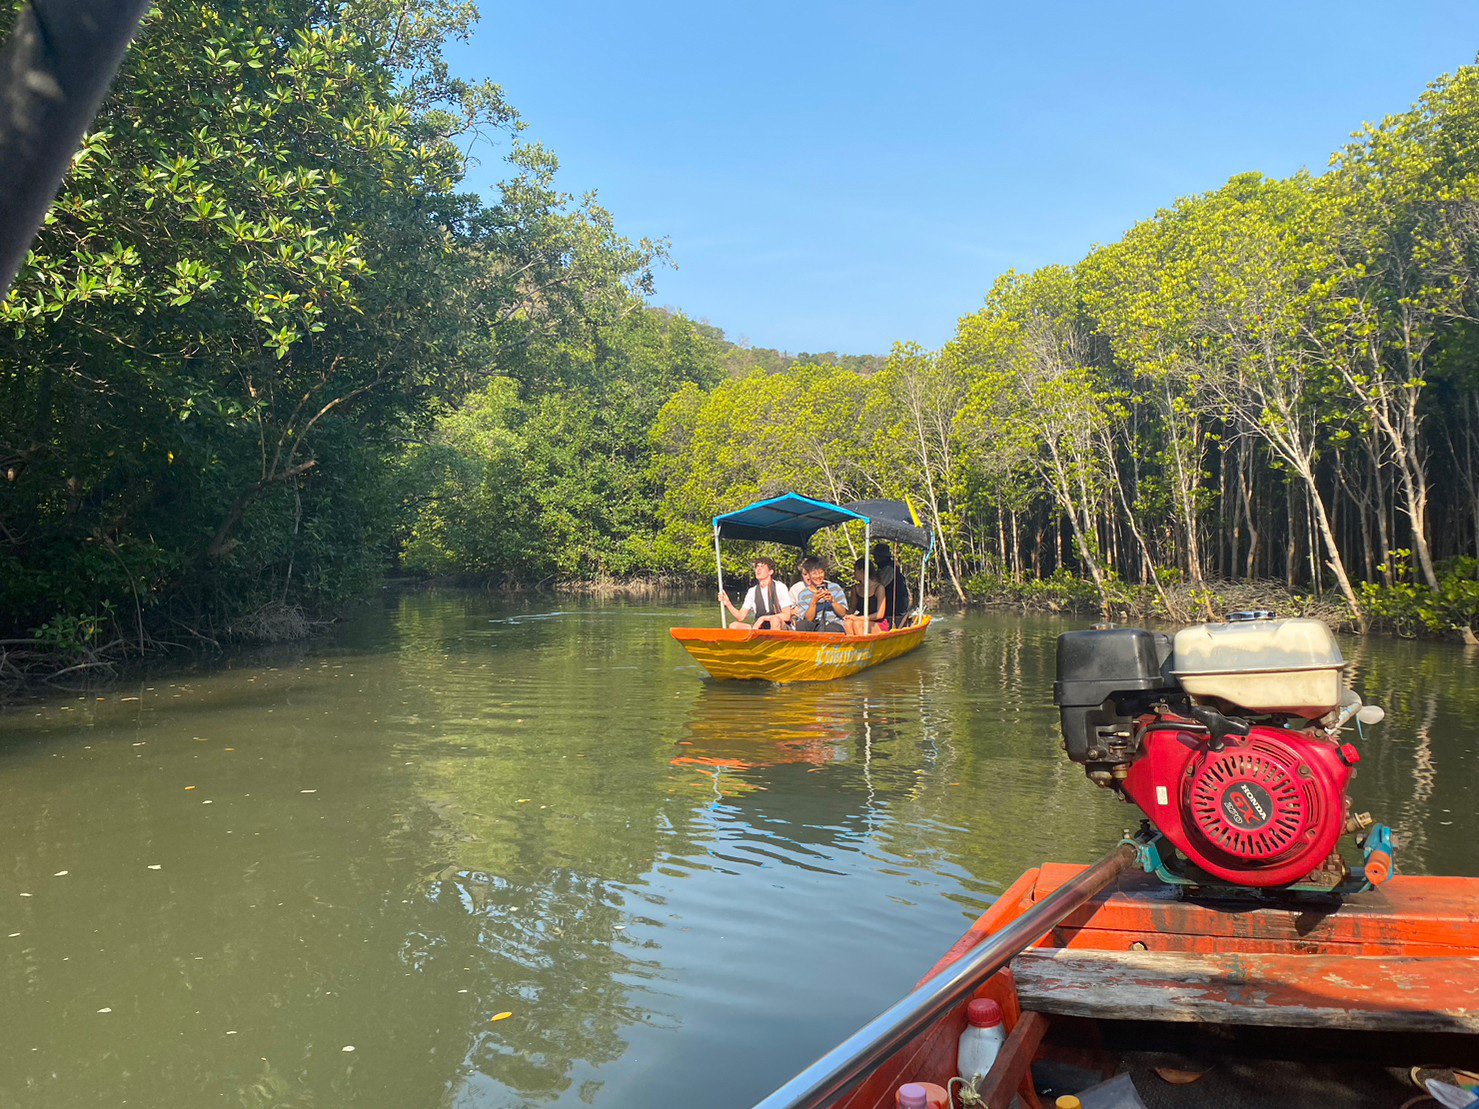 AIFS-freiwilligenarbeit-thailand-environmental-conservation-personen-volunteers-berg-mangroven-Boot